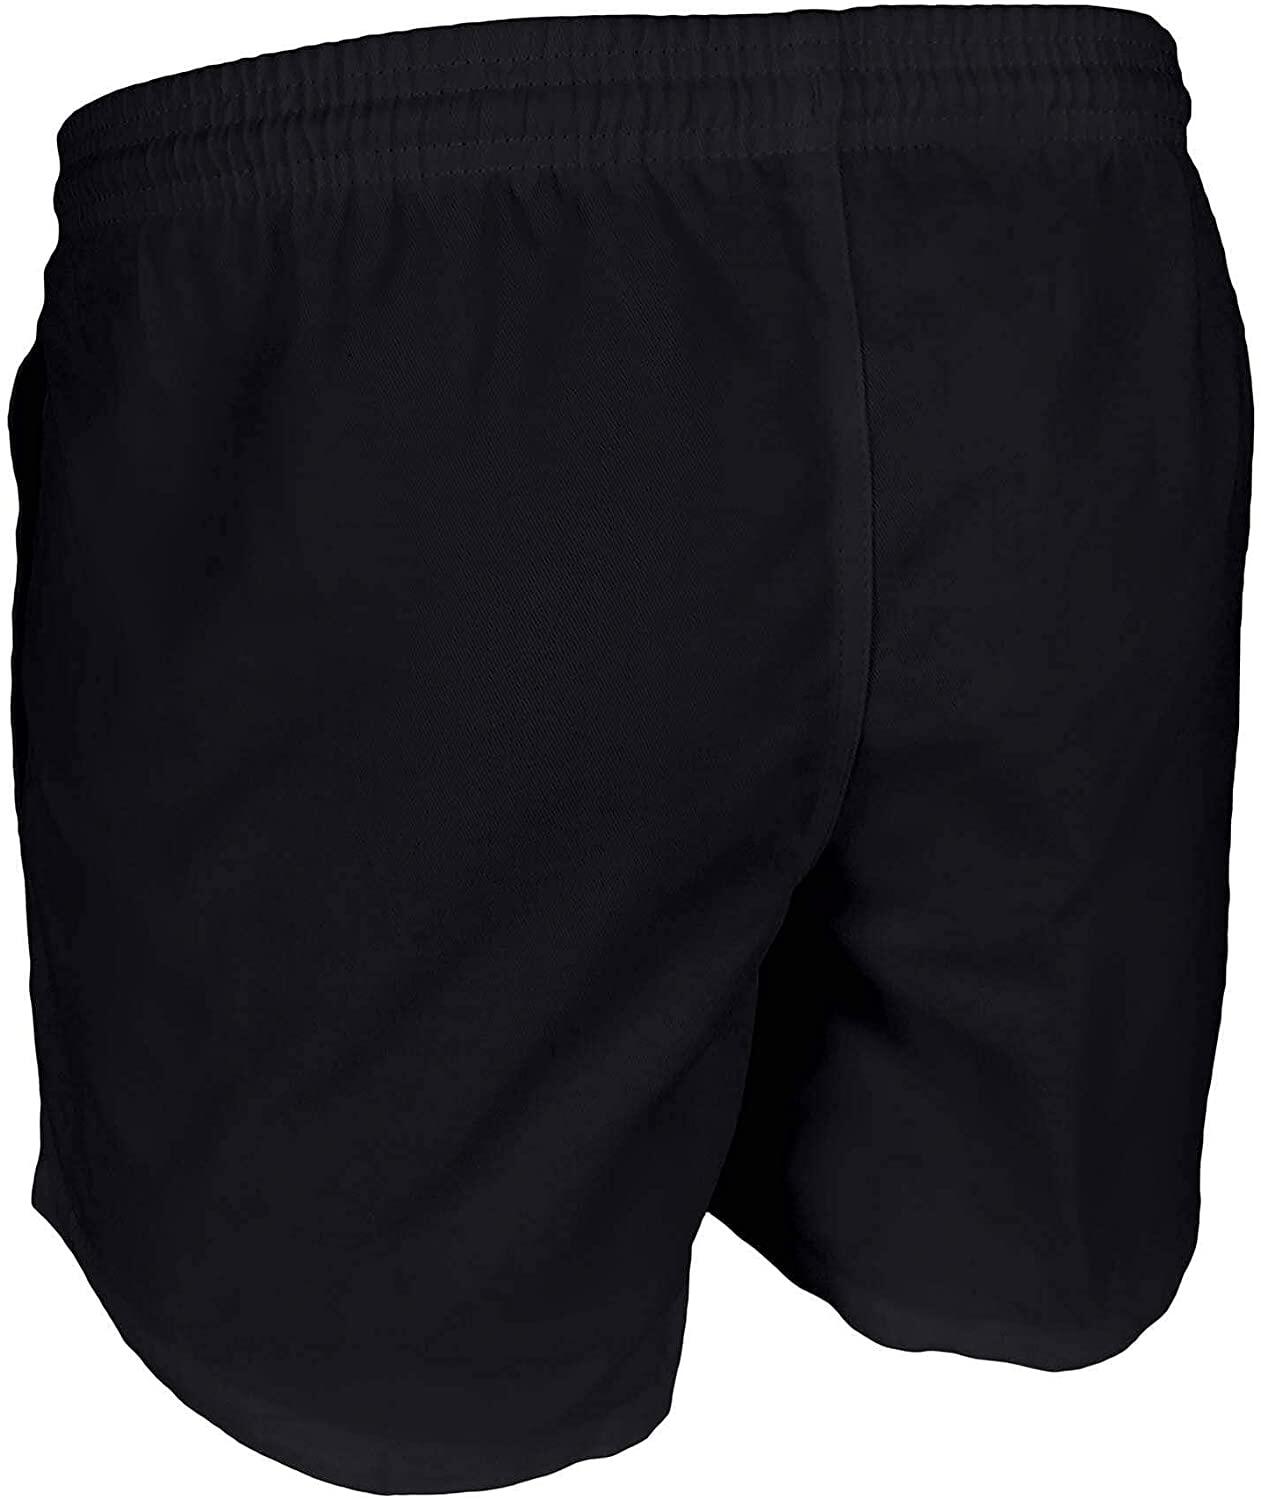 Kiwi Pro Shorts, Black 3/4